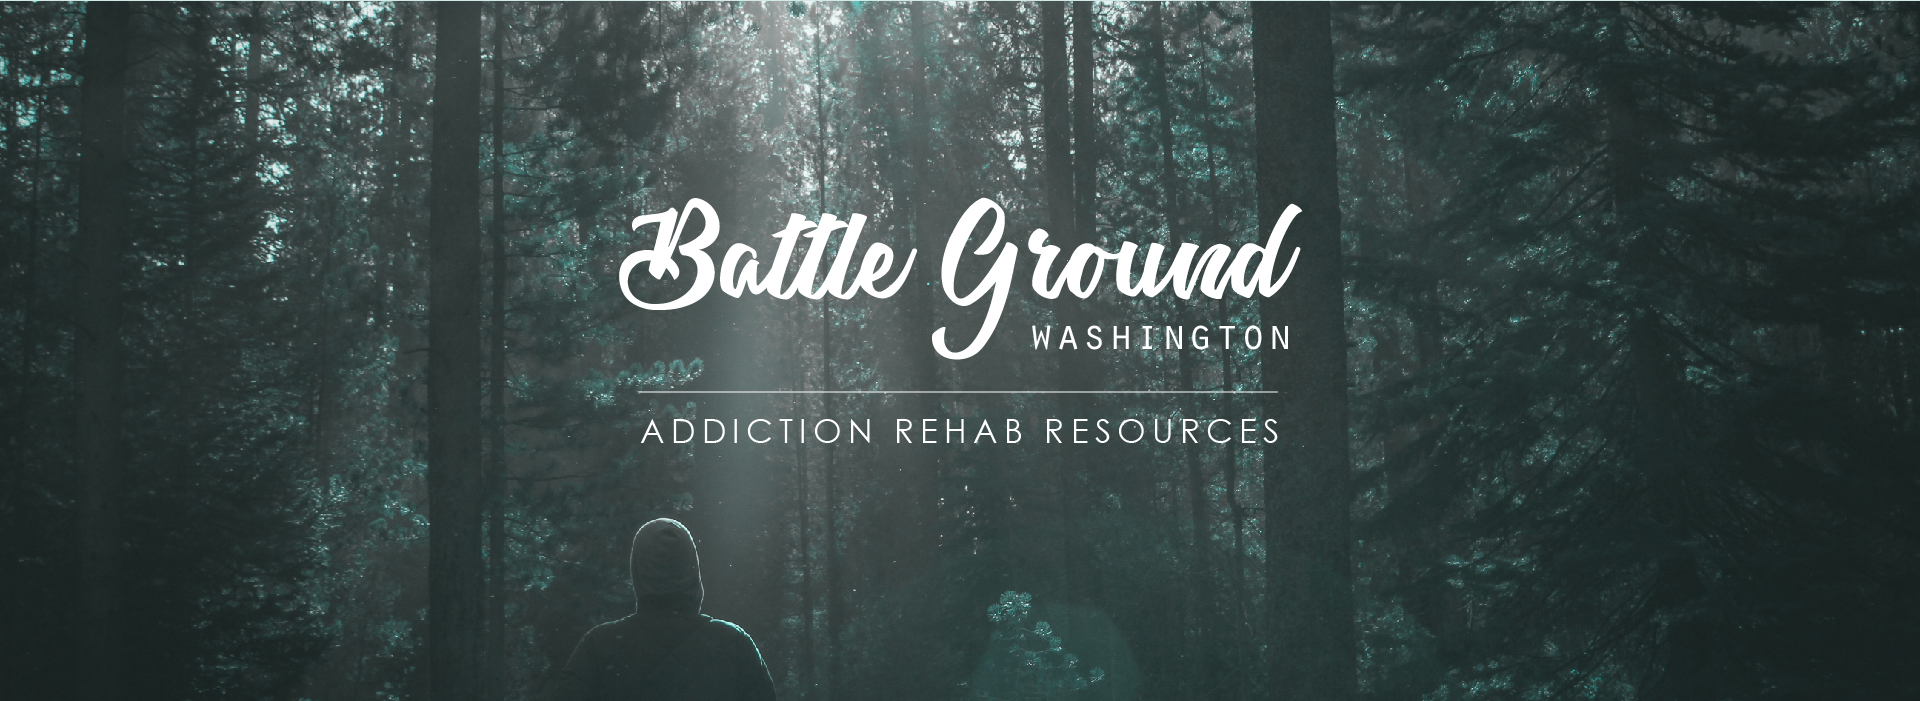 Battle Ground, Washington Addiction Resources